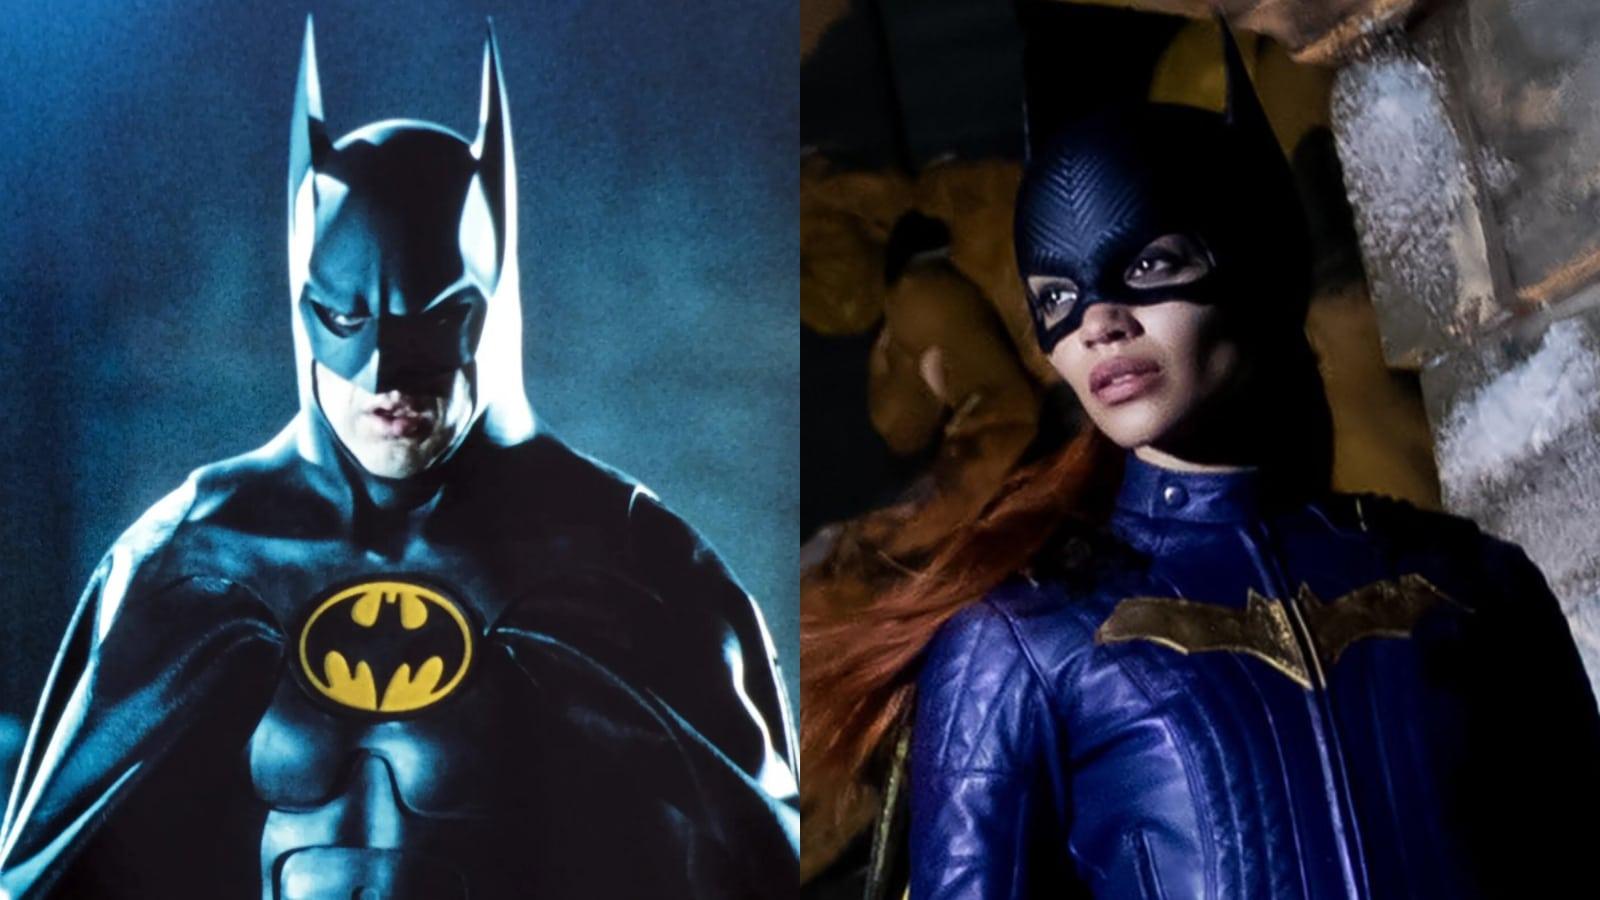 Michael Keaton as Batman and Leslie Grace in the canceled Batgirl movie